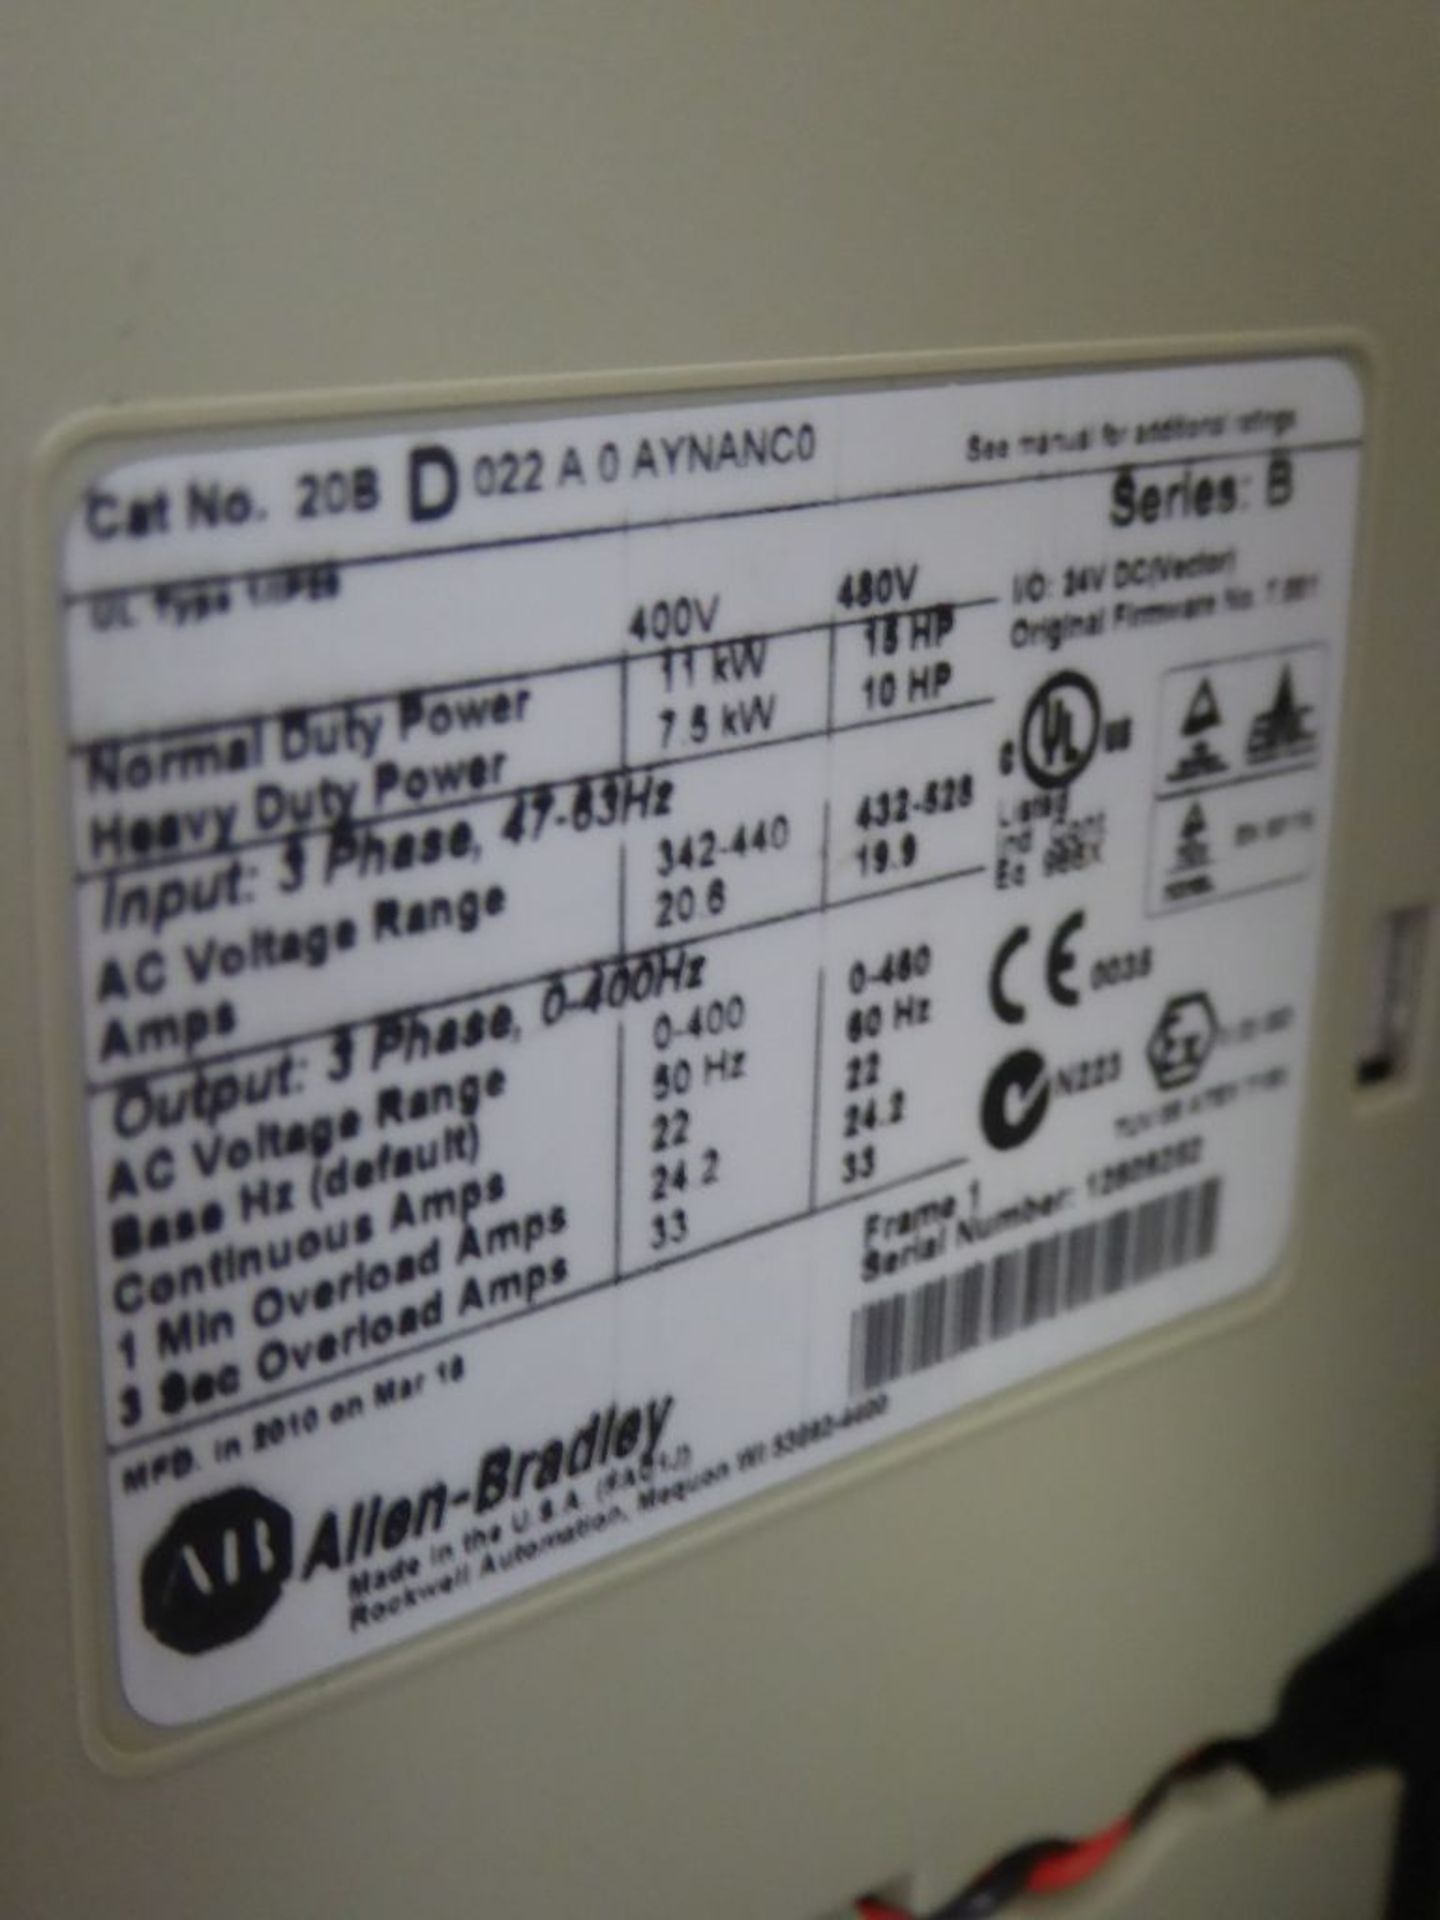 Control Panel w/(2) Allen Bradley Powerflex 700 Drives - Image 10 of 23